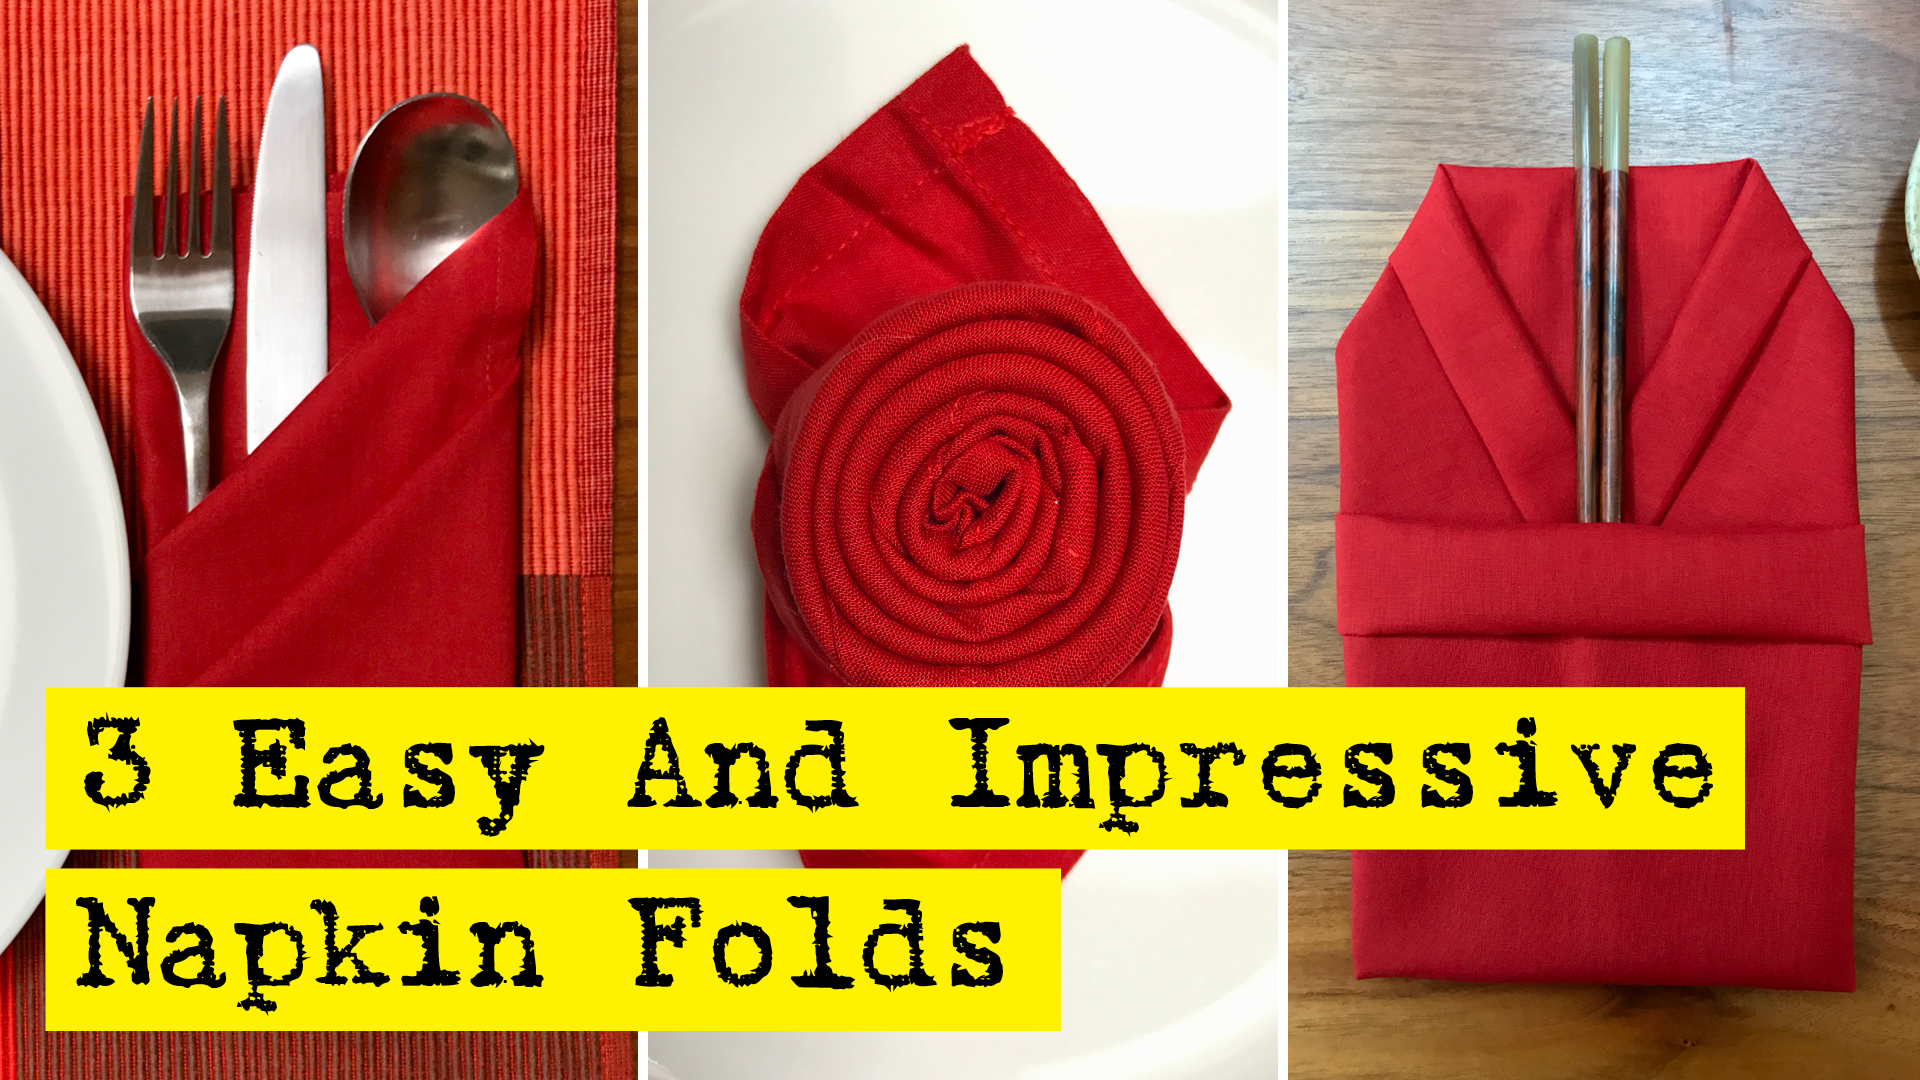 3 Easy And Impressive Napkin Folds by DIY Presto!